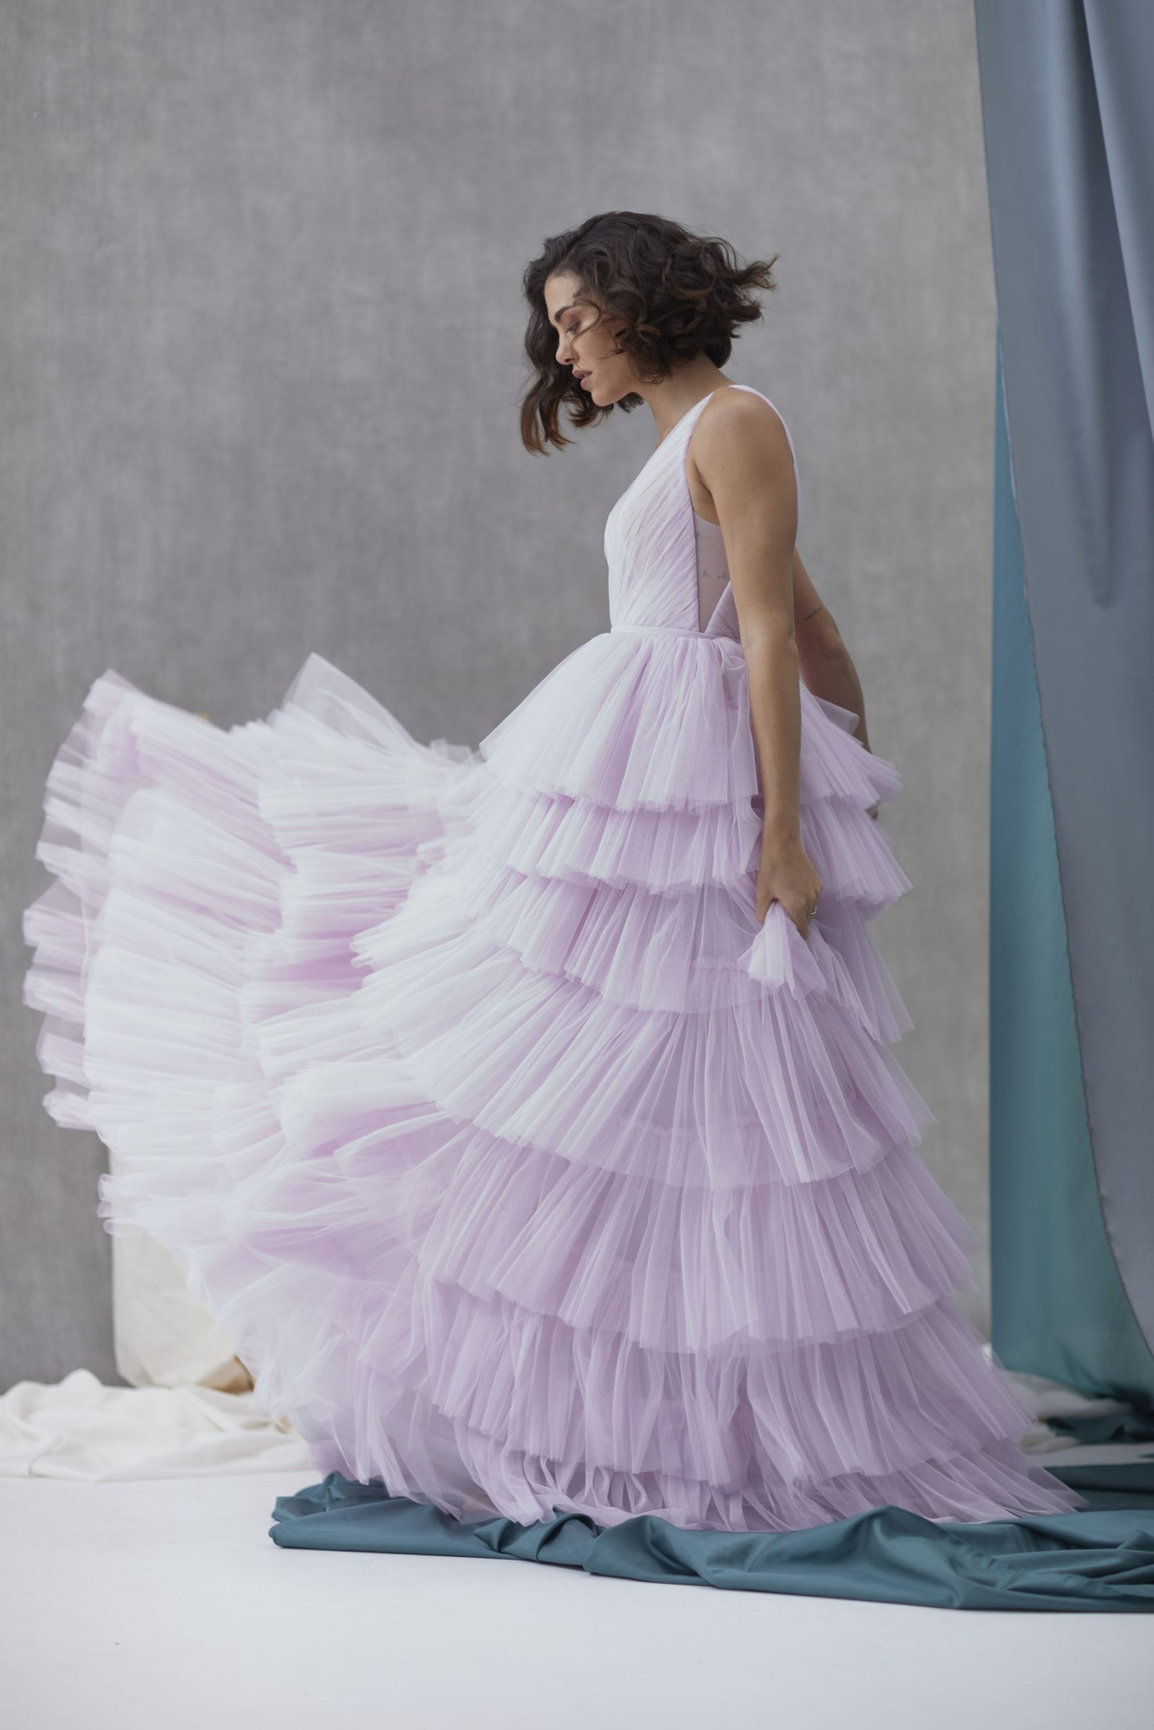 10 Reasons To Choose A Bespoke Wedding Dress